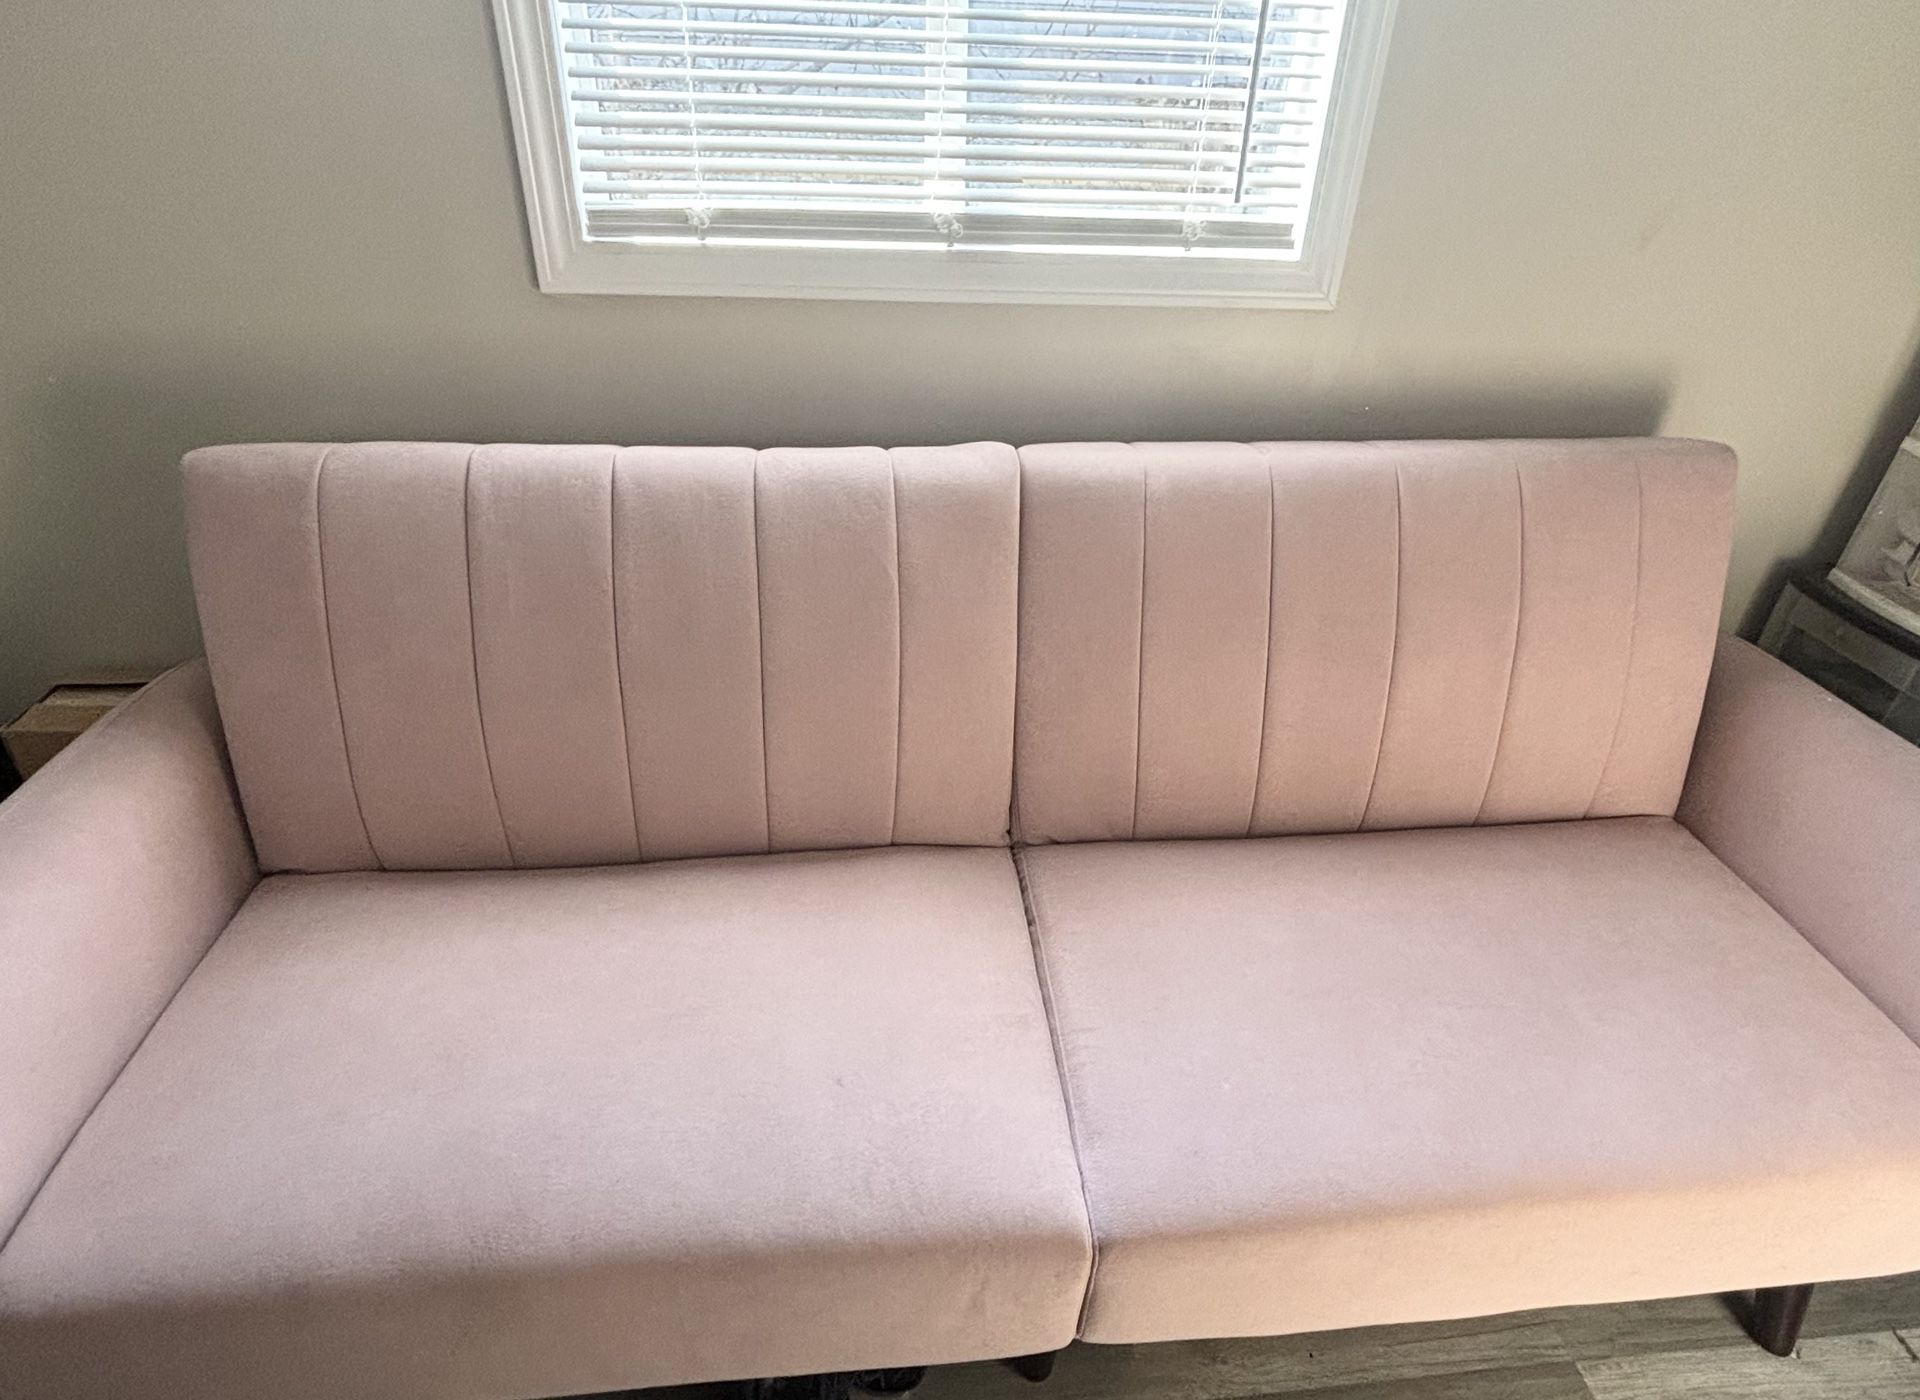 Selling New Pink futon